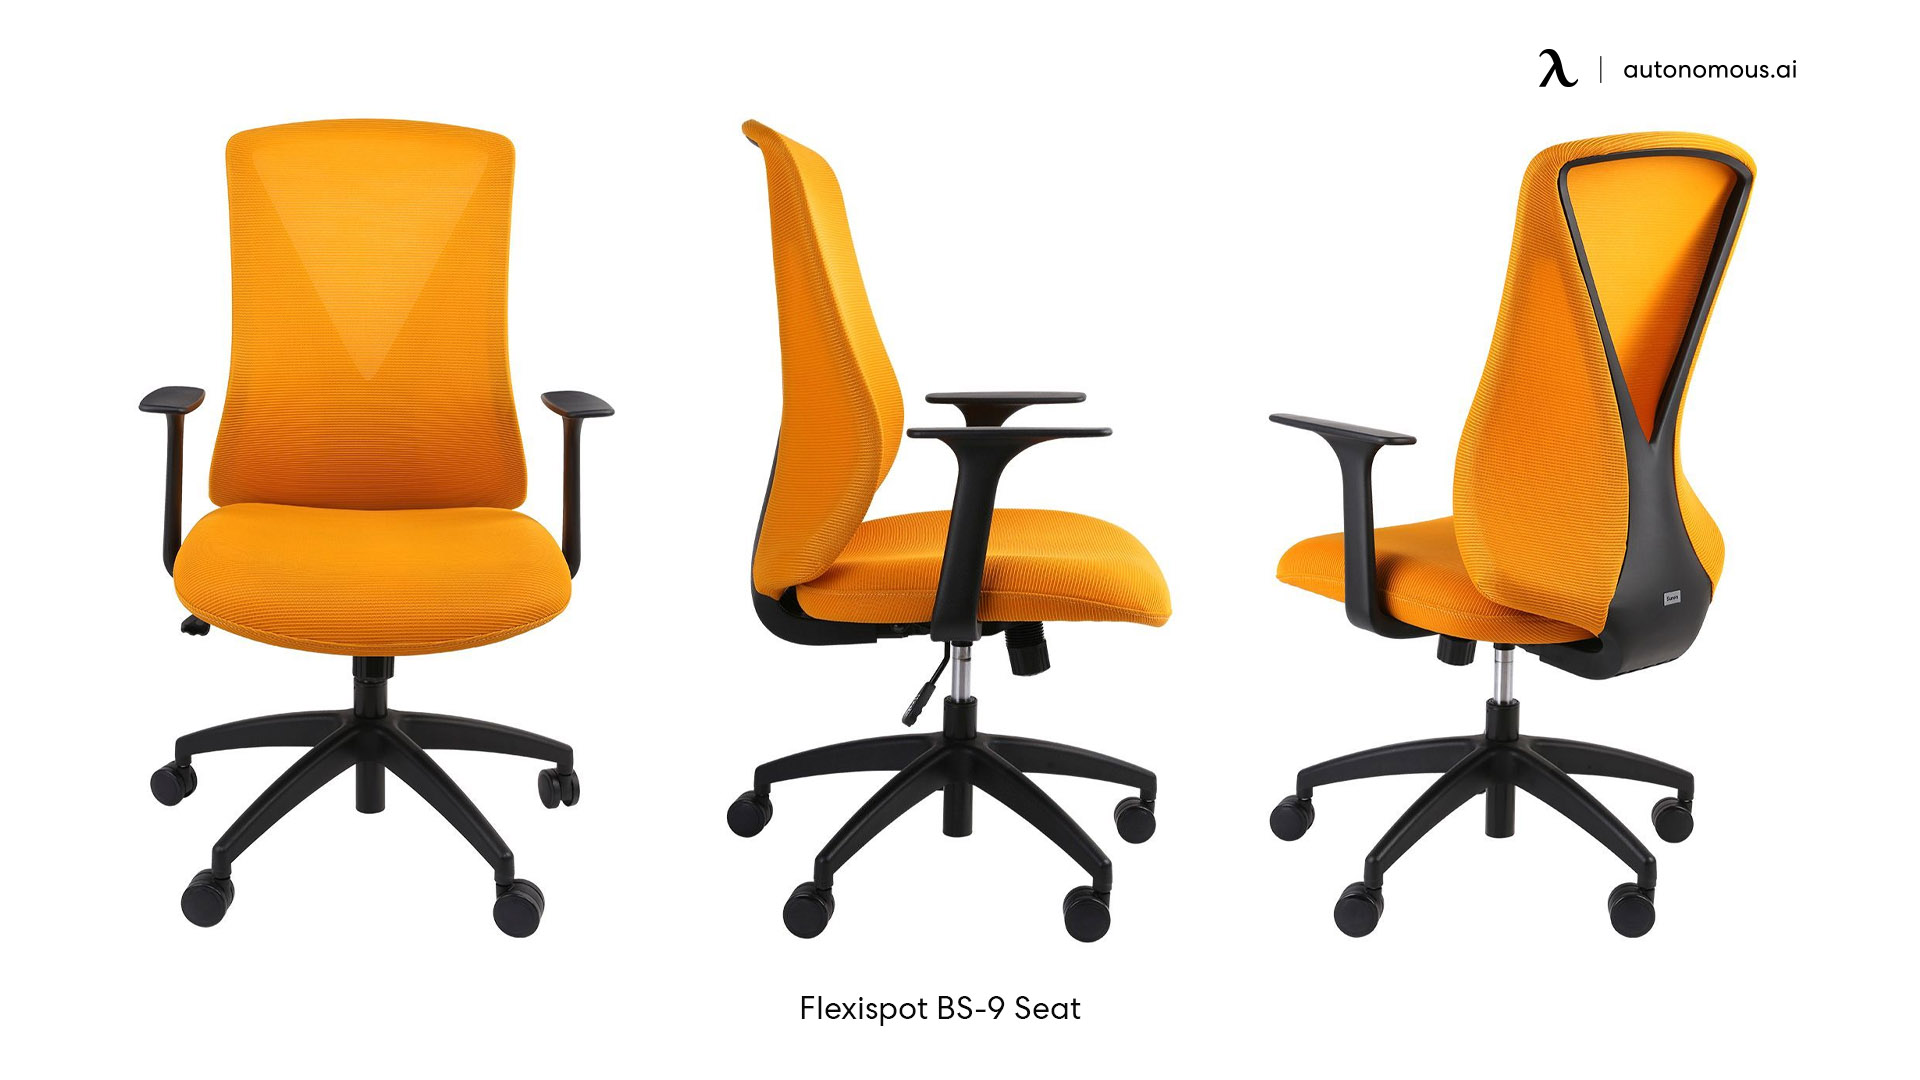 Flexispot BS-9 Seat trendy desk chair